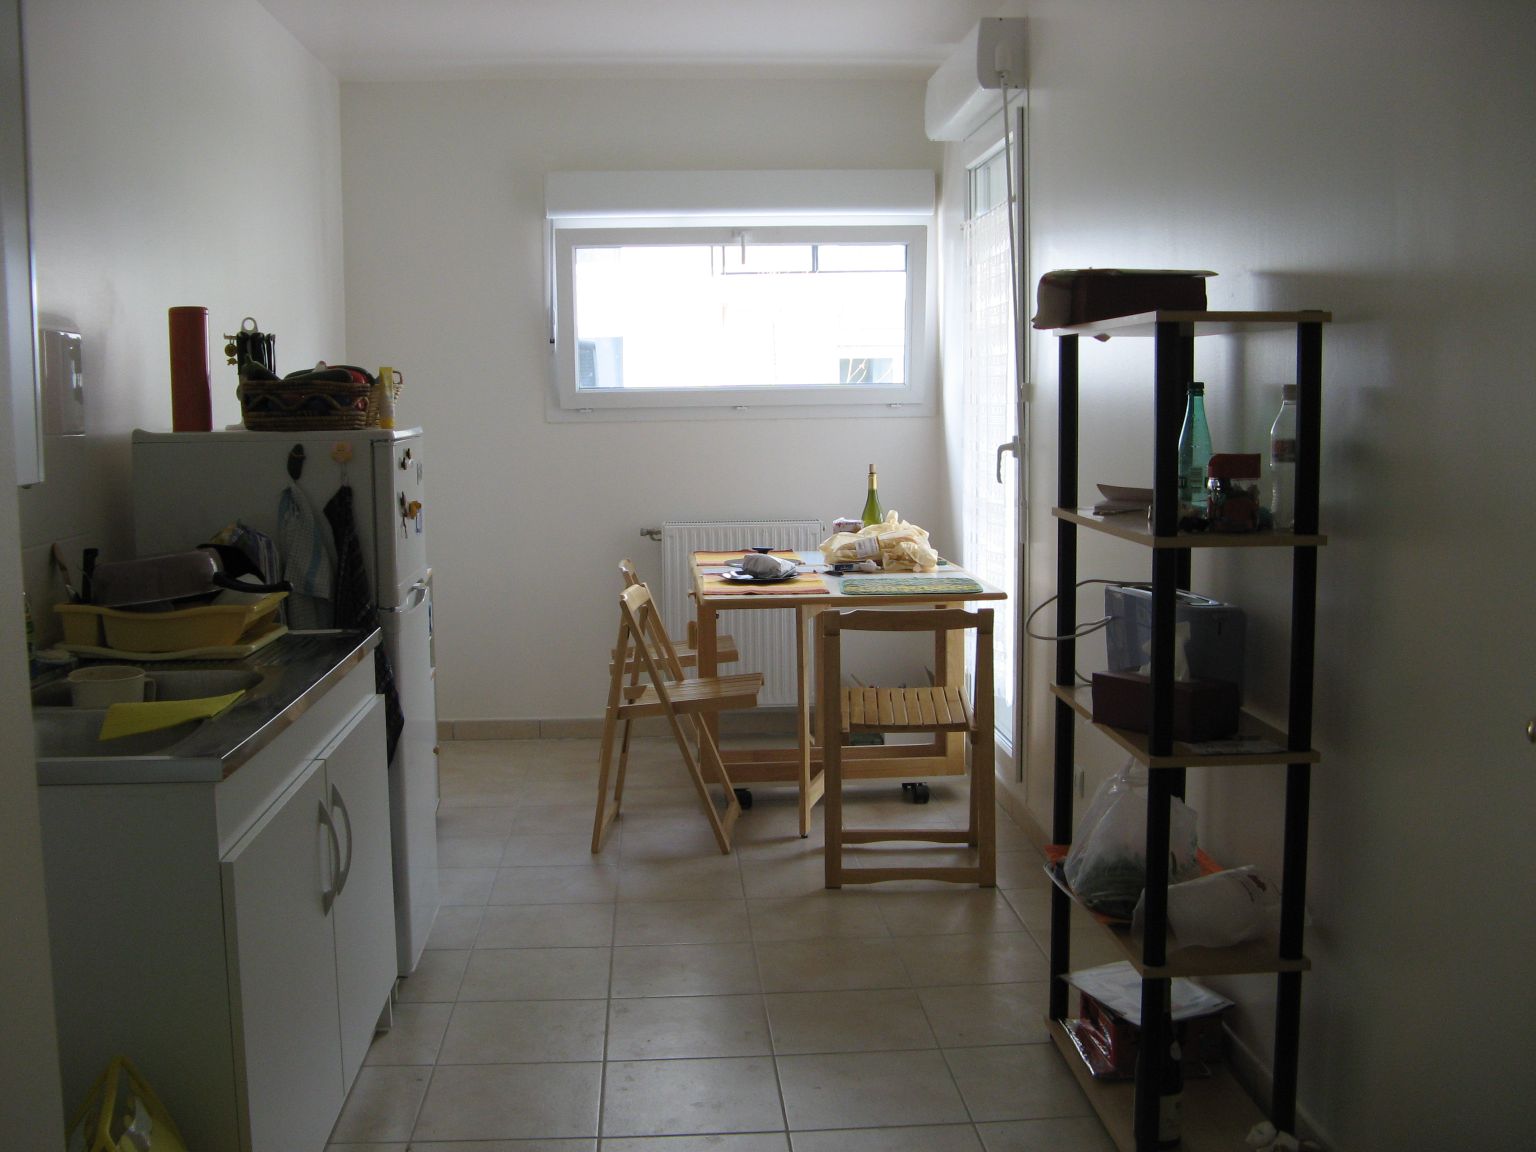 [my apartment: kitchen]